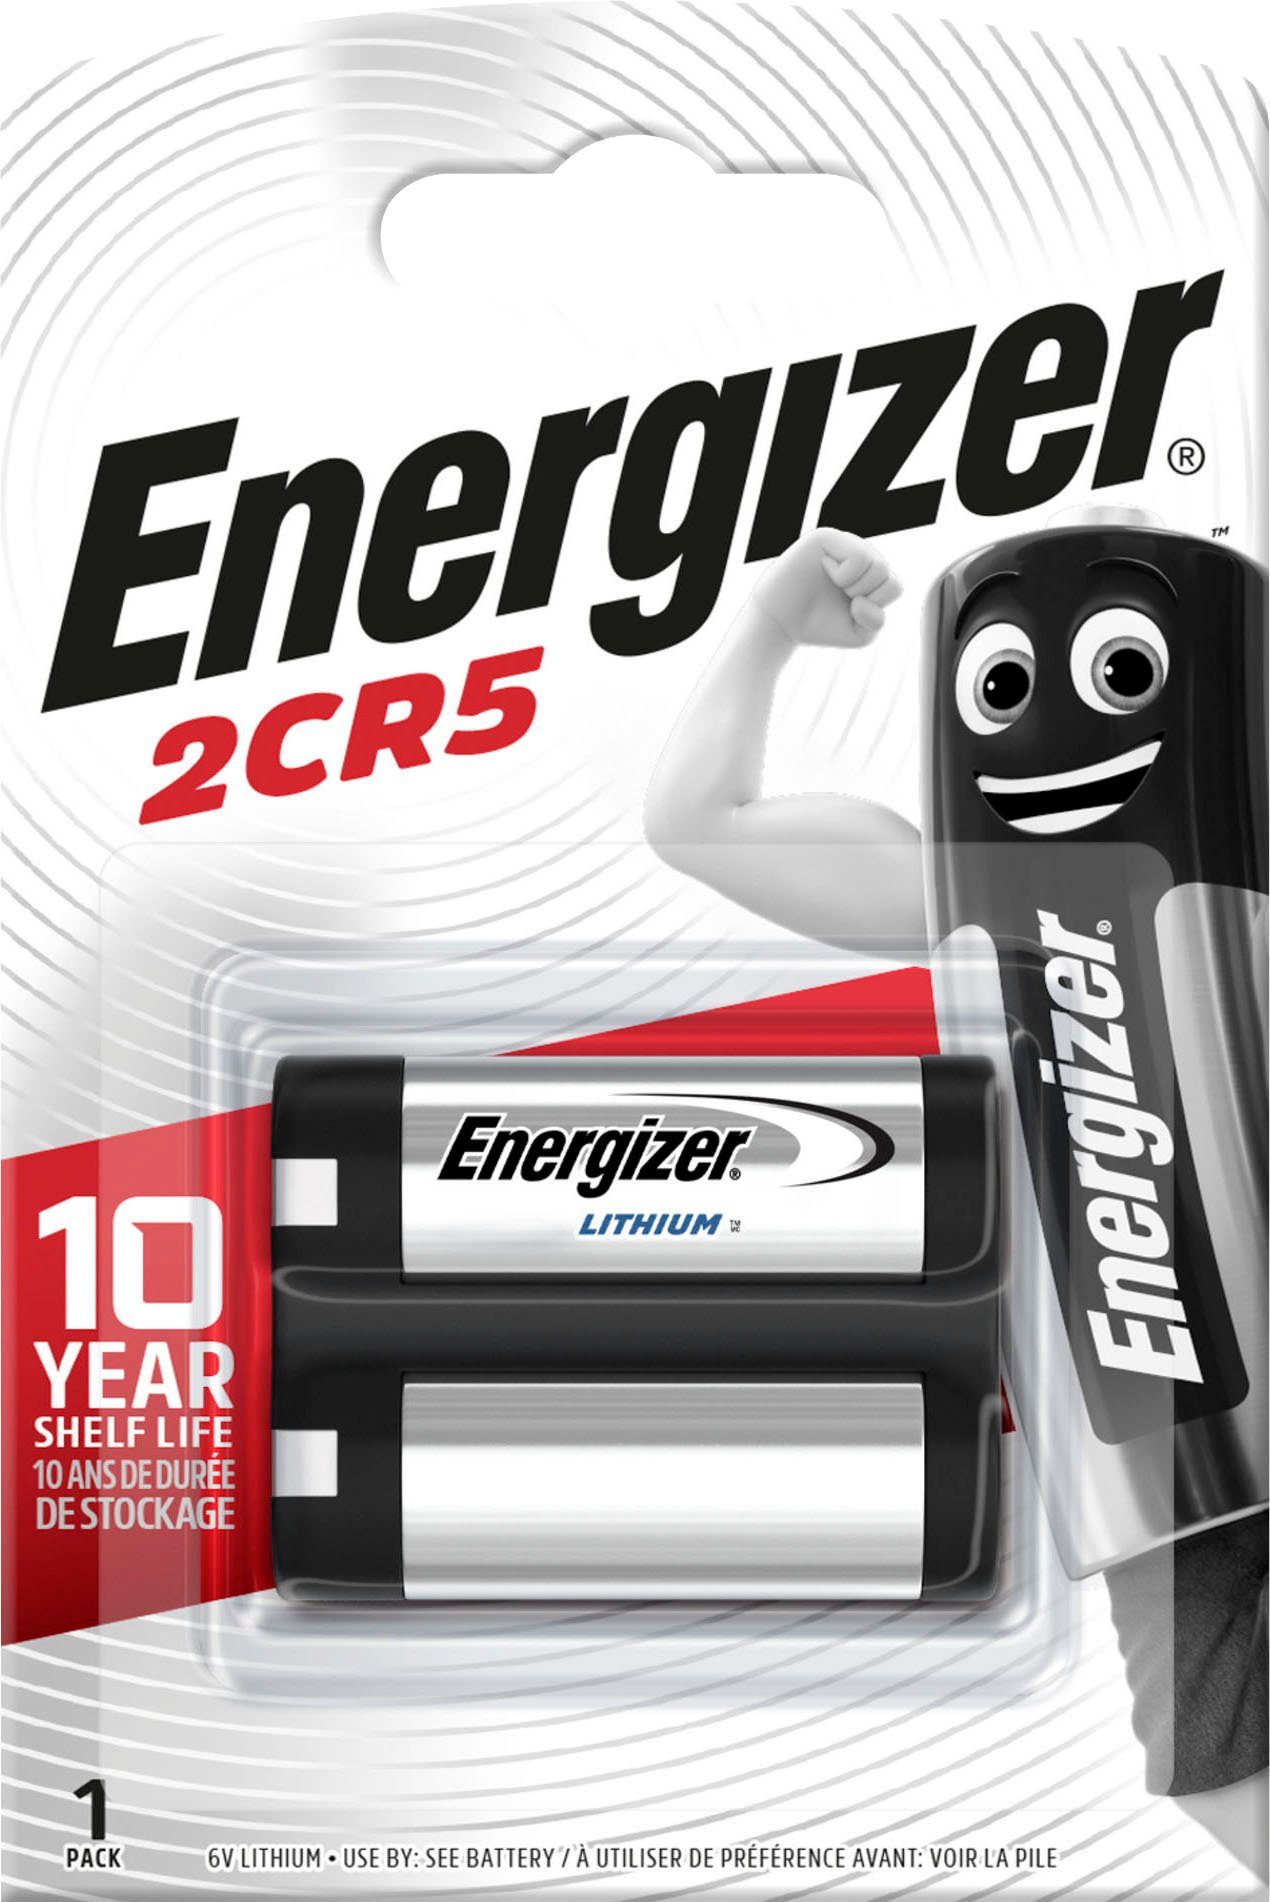 Energizer 1 Stck Lithium Foto 2CR5 Batterie, (6 V, 1 St)